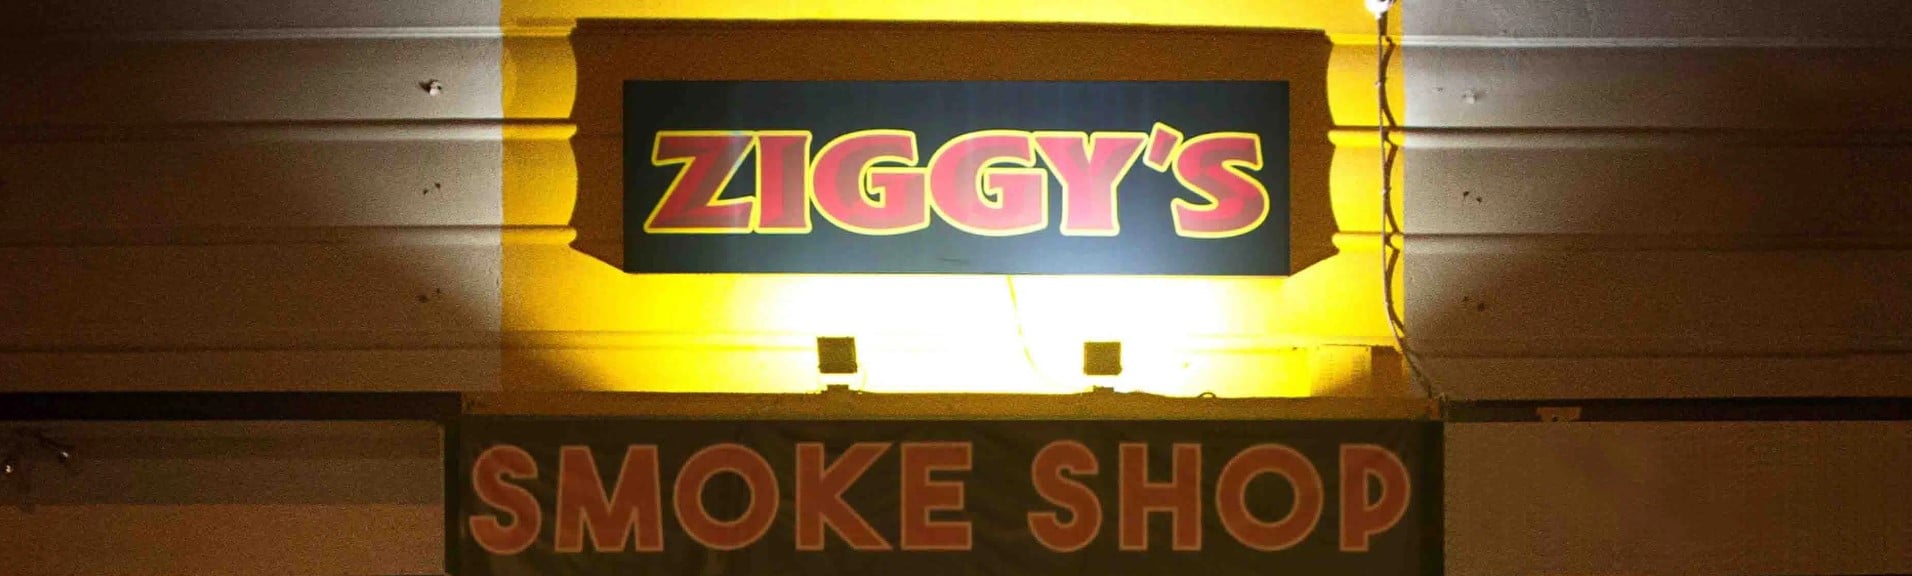 ziggys-smoke-shop